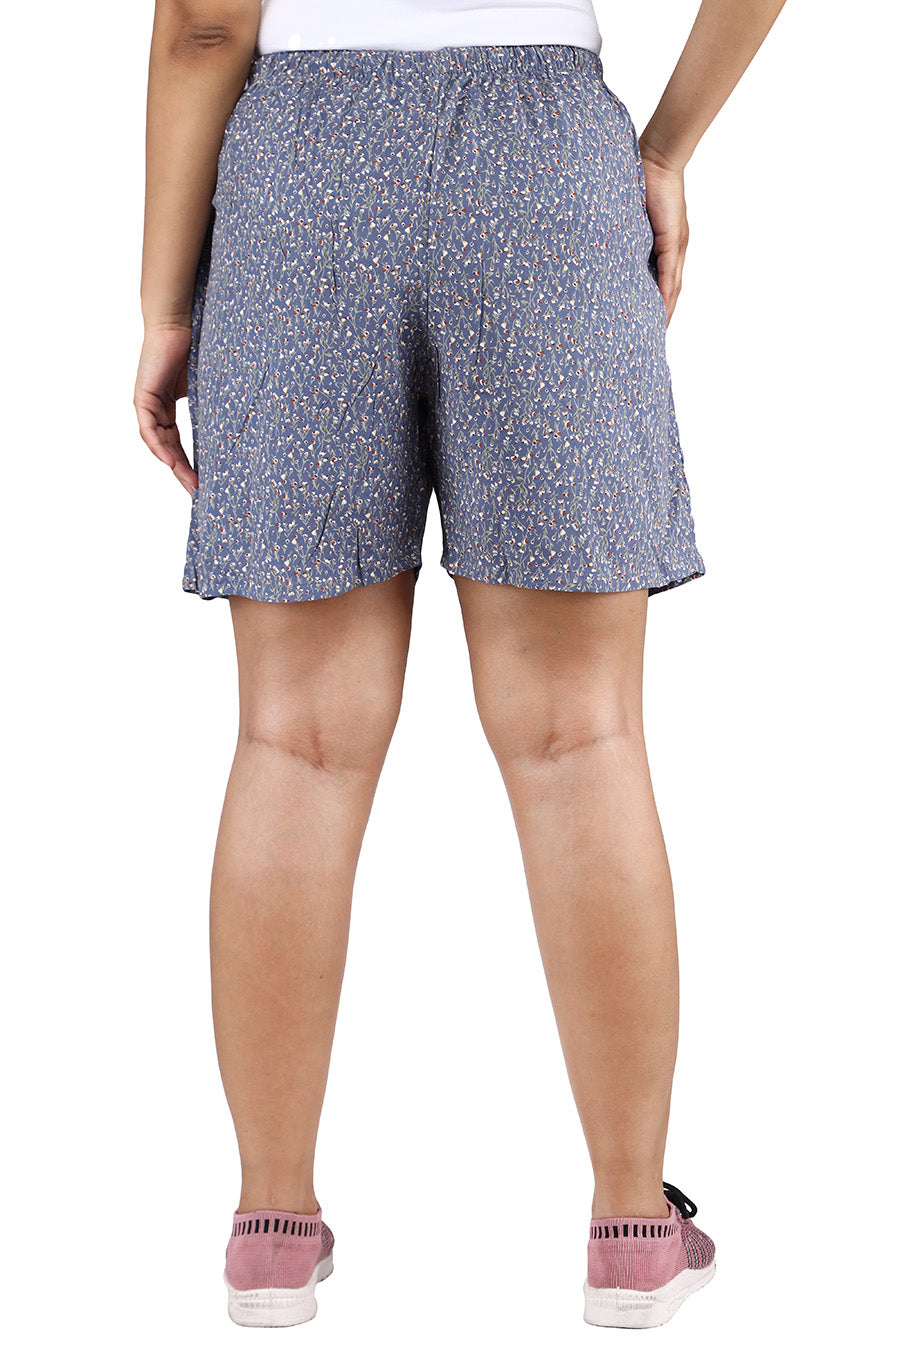 Comfort Lady Printed Shorts